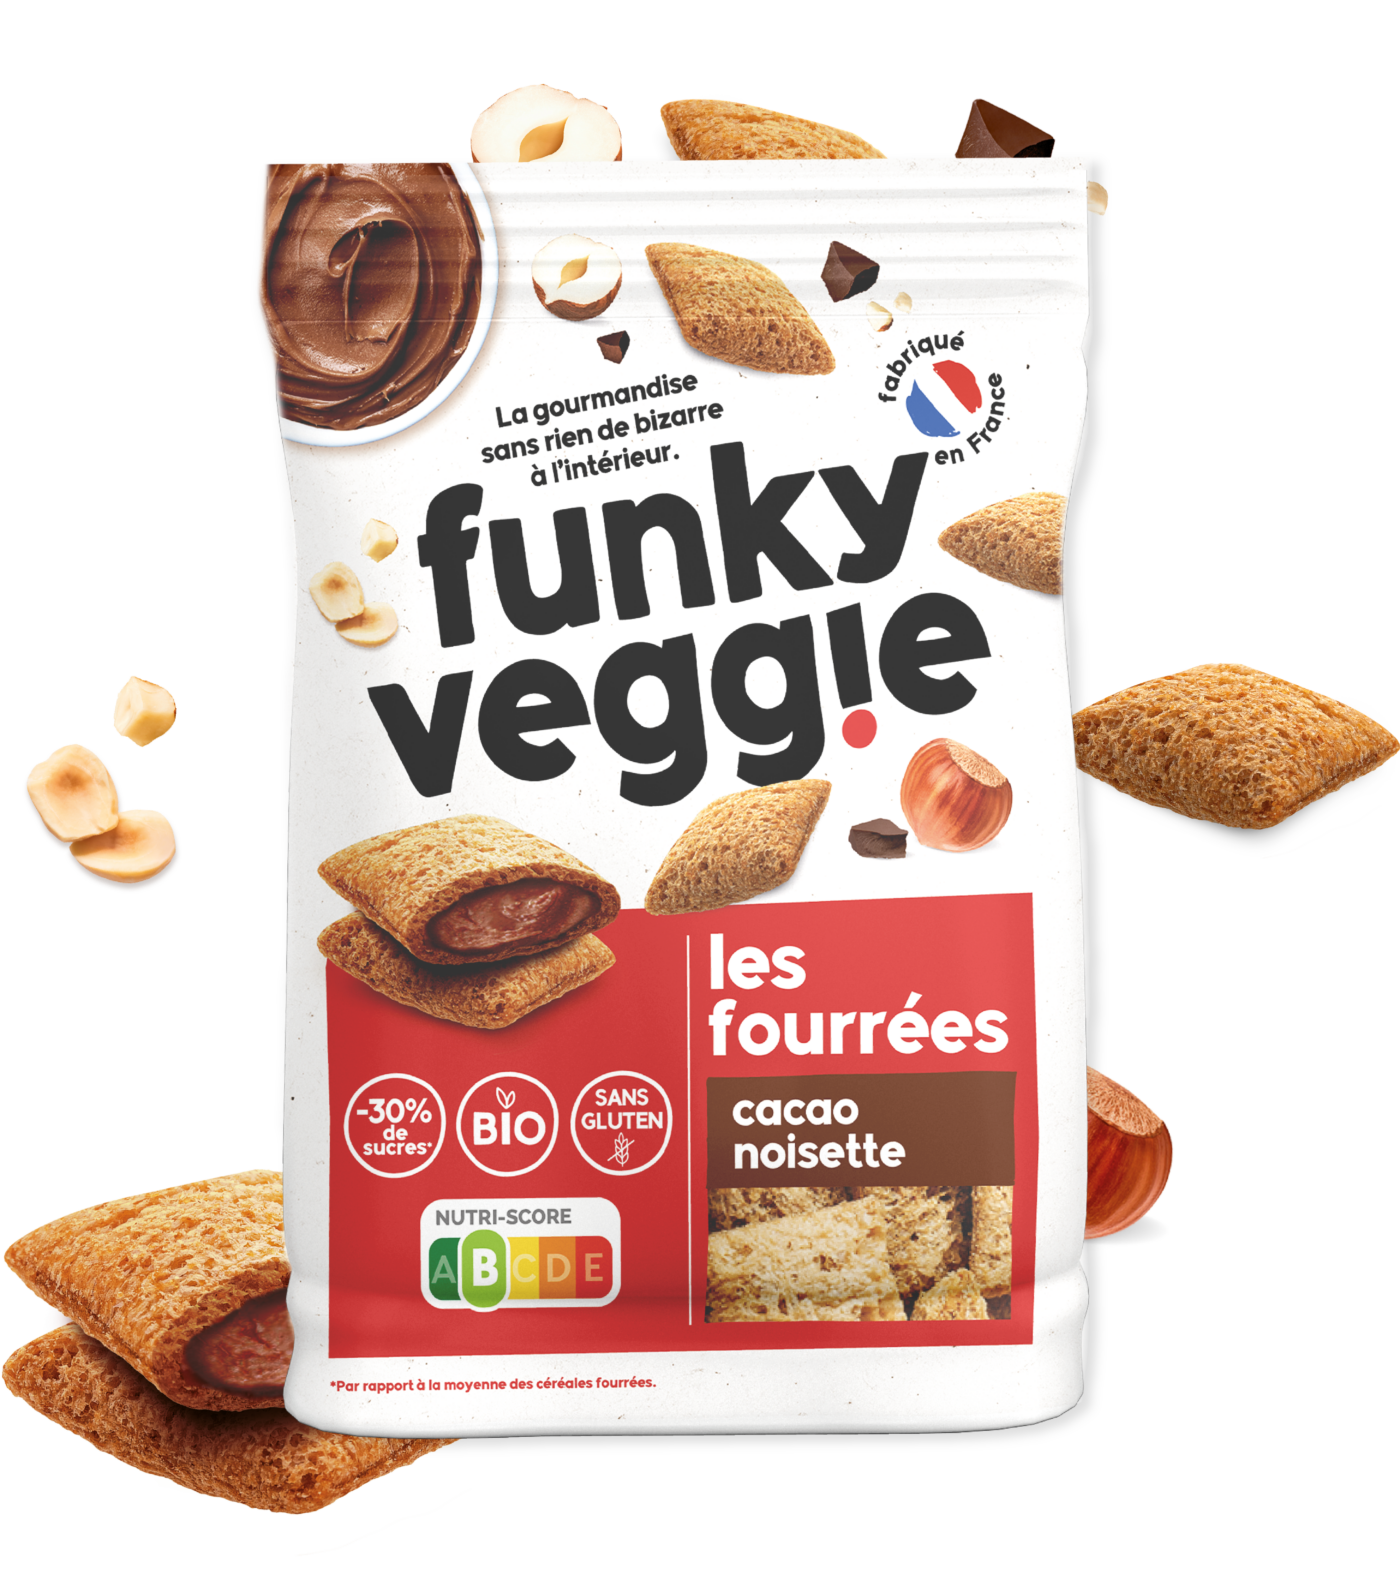 Funky Veggie : les encas sains mais funky !